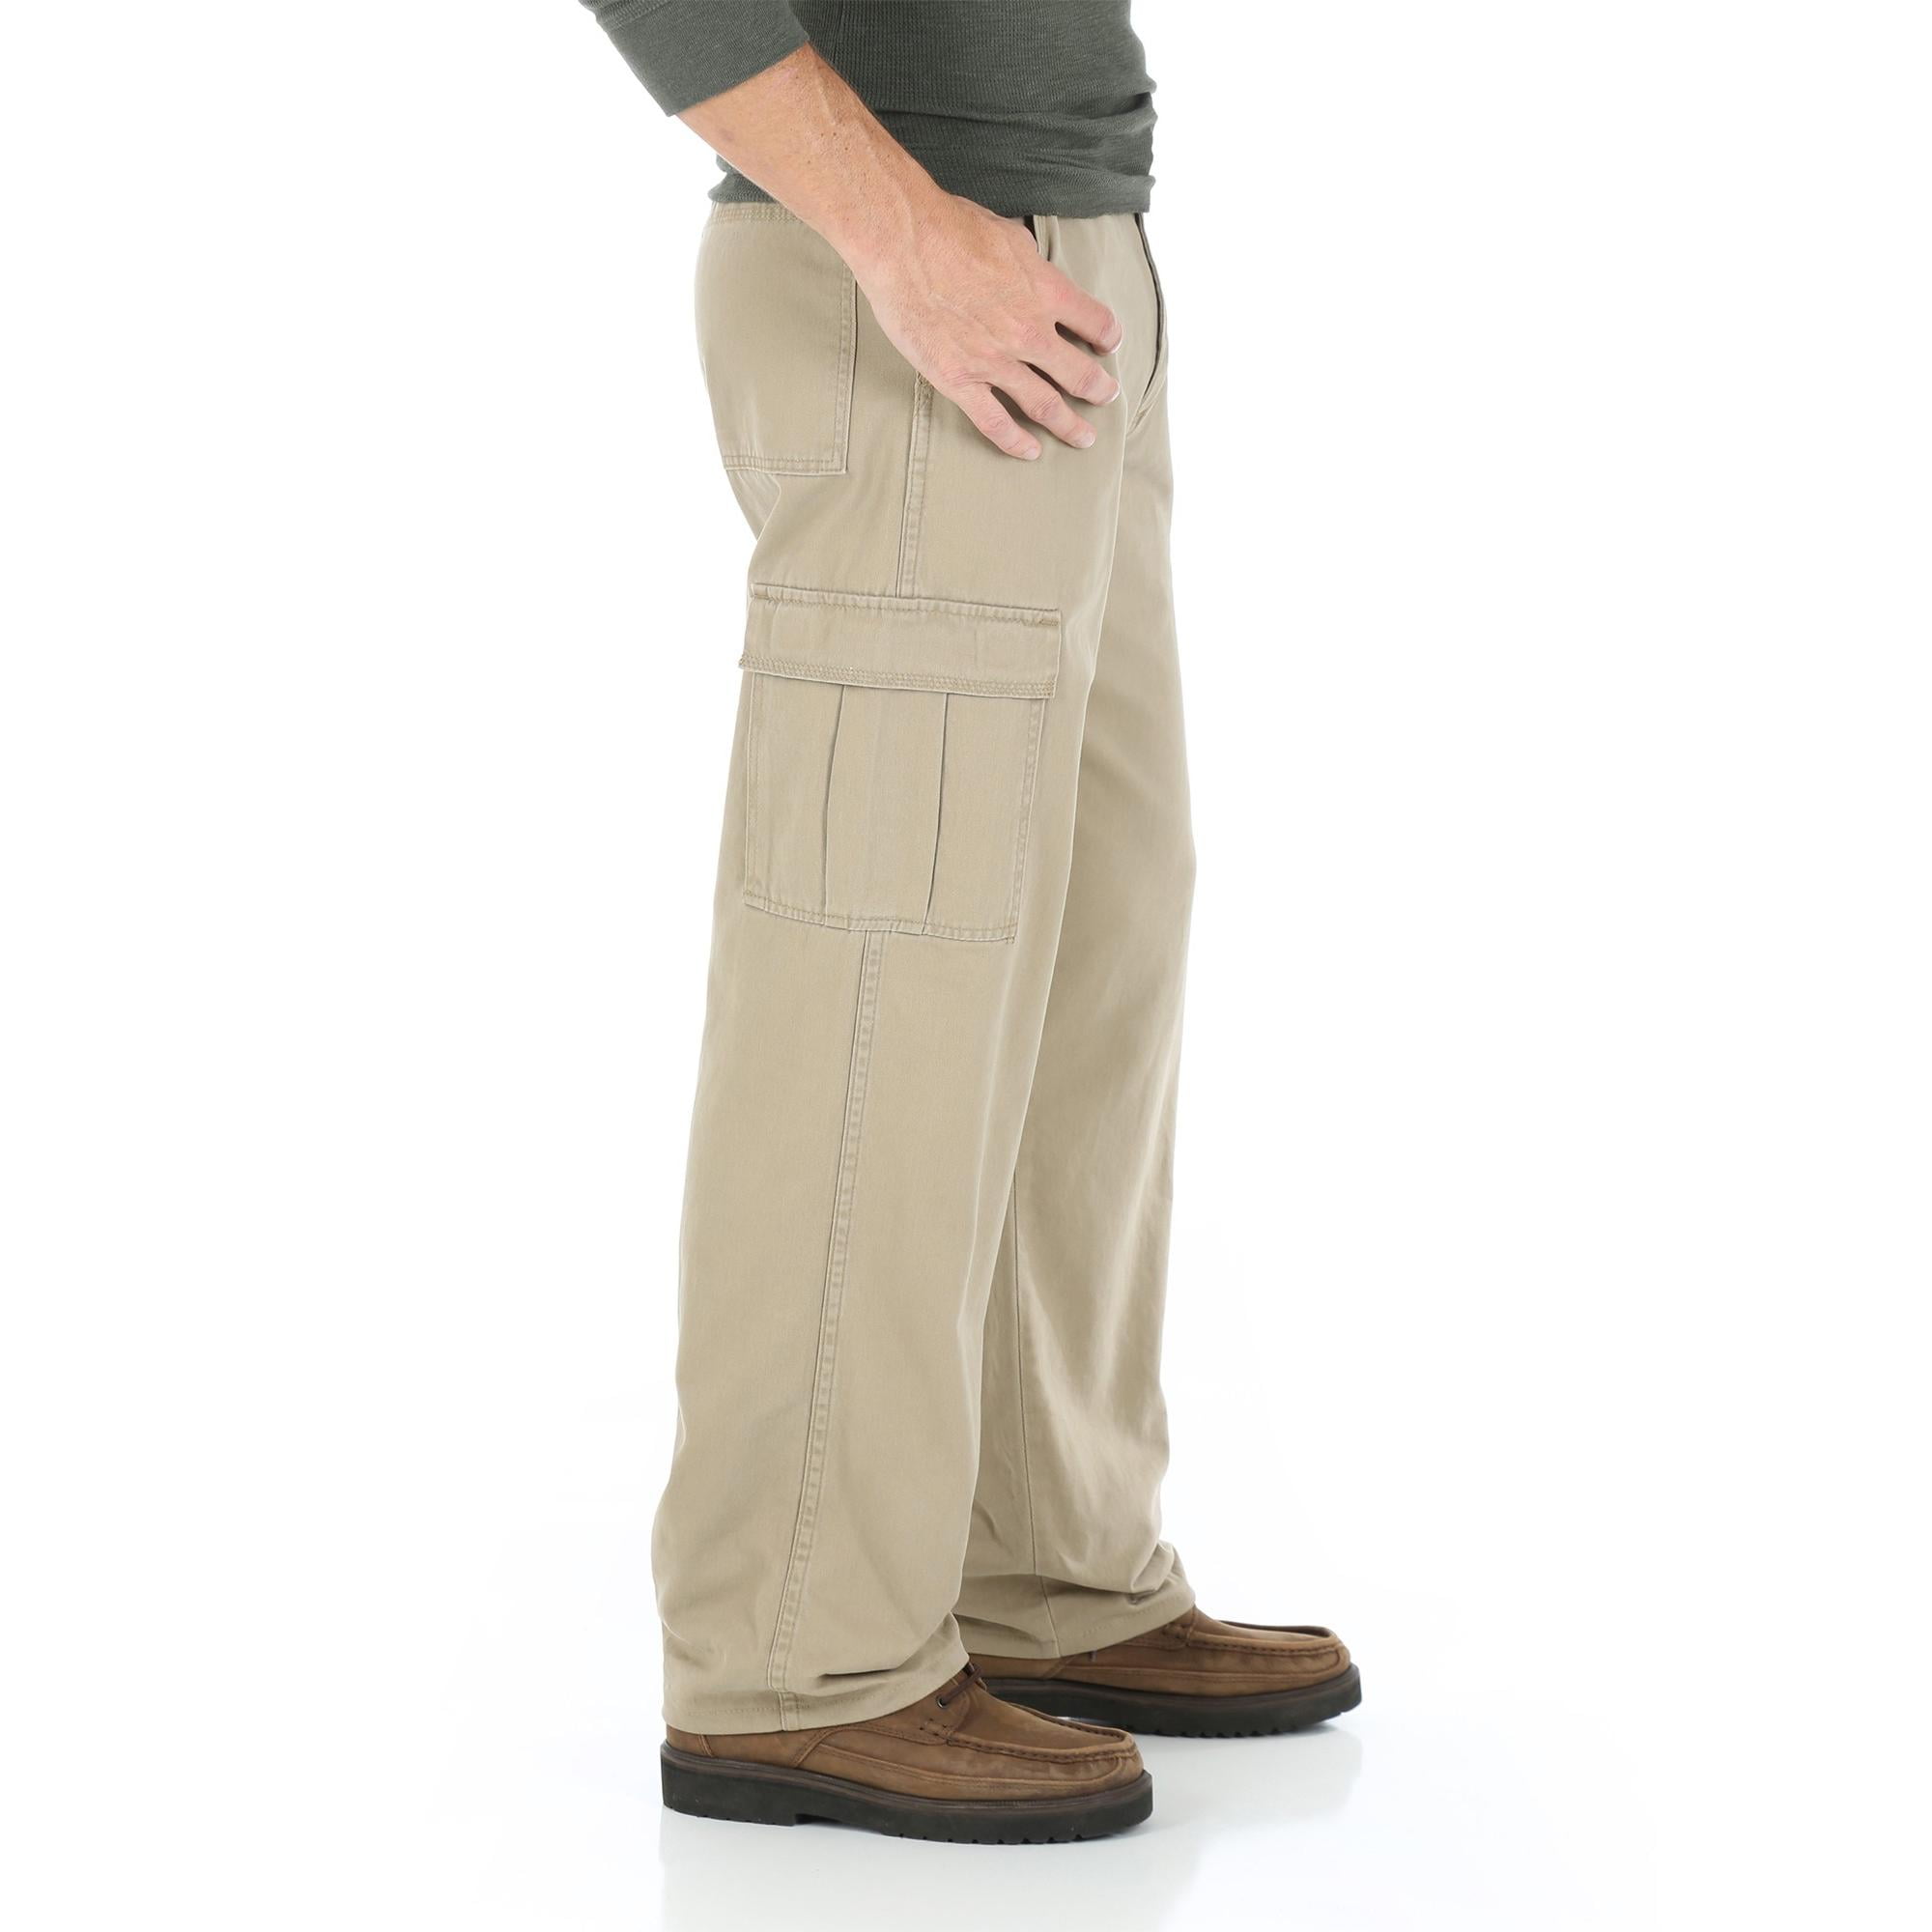 ONE POINT ONE Mens Fashion Athletic Joggers Pants CottonSpandex Slim Fit  Cargo Pants  Walmartcom